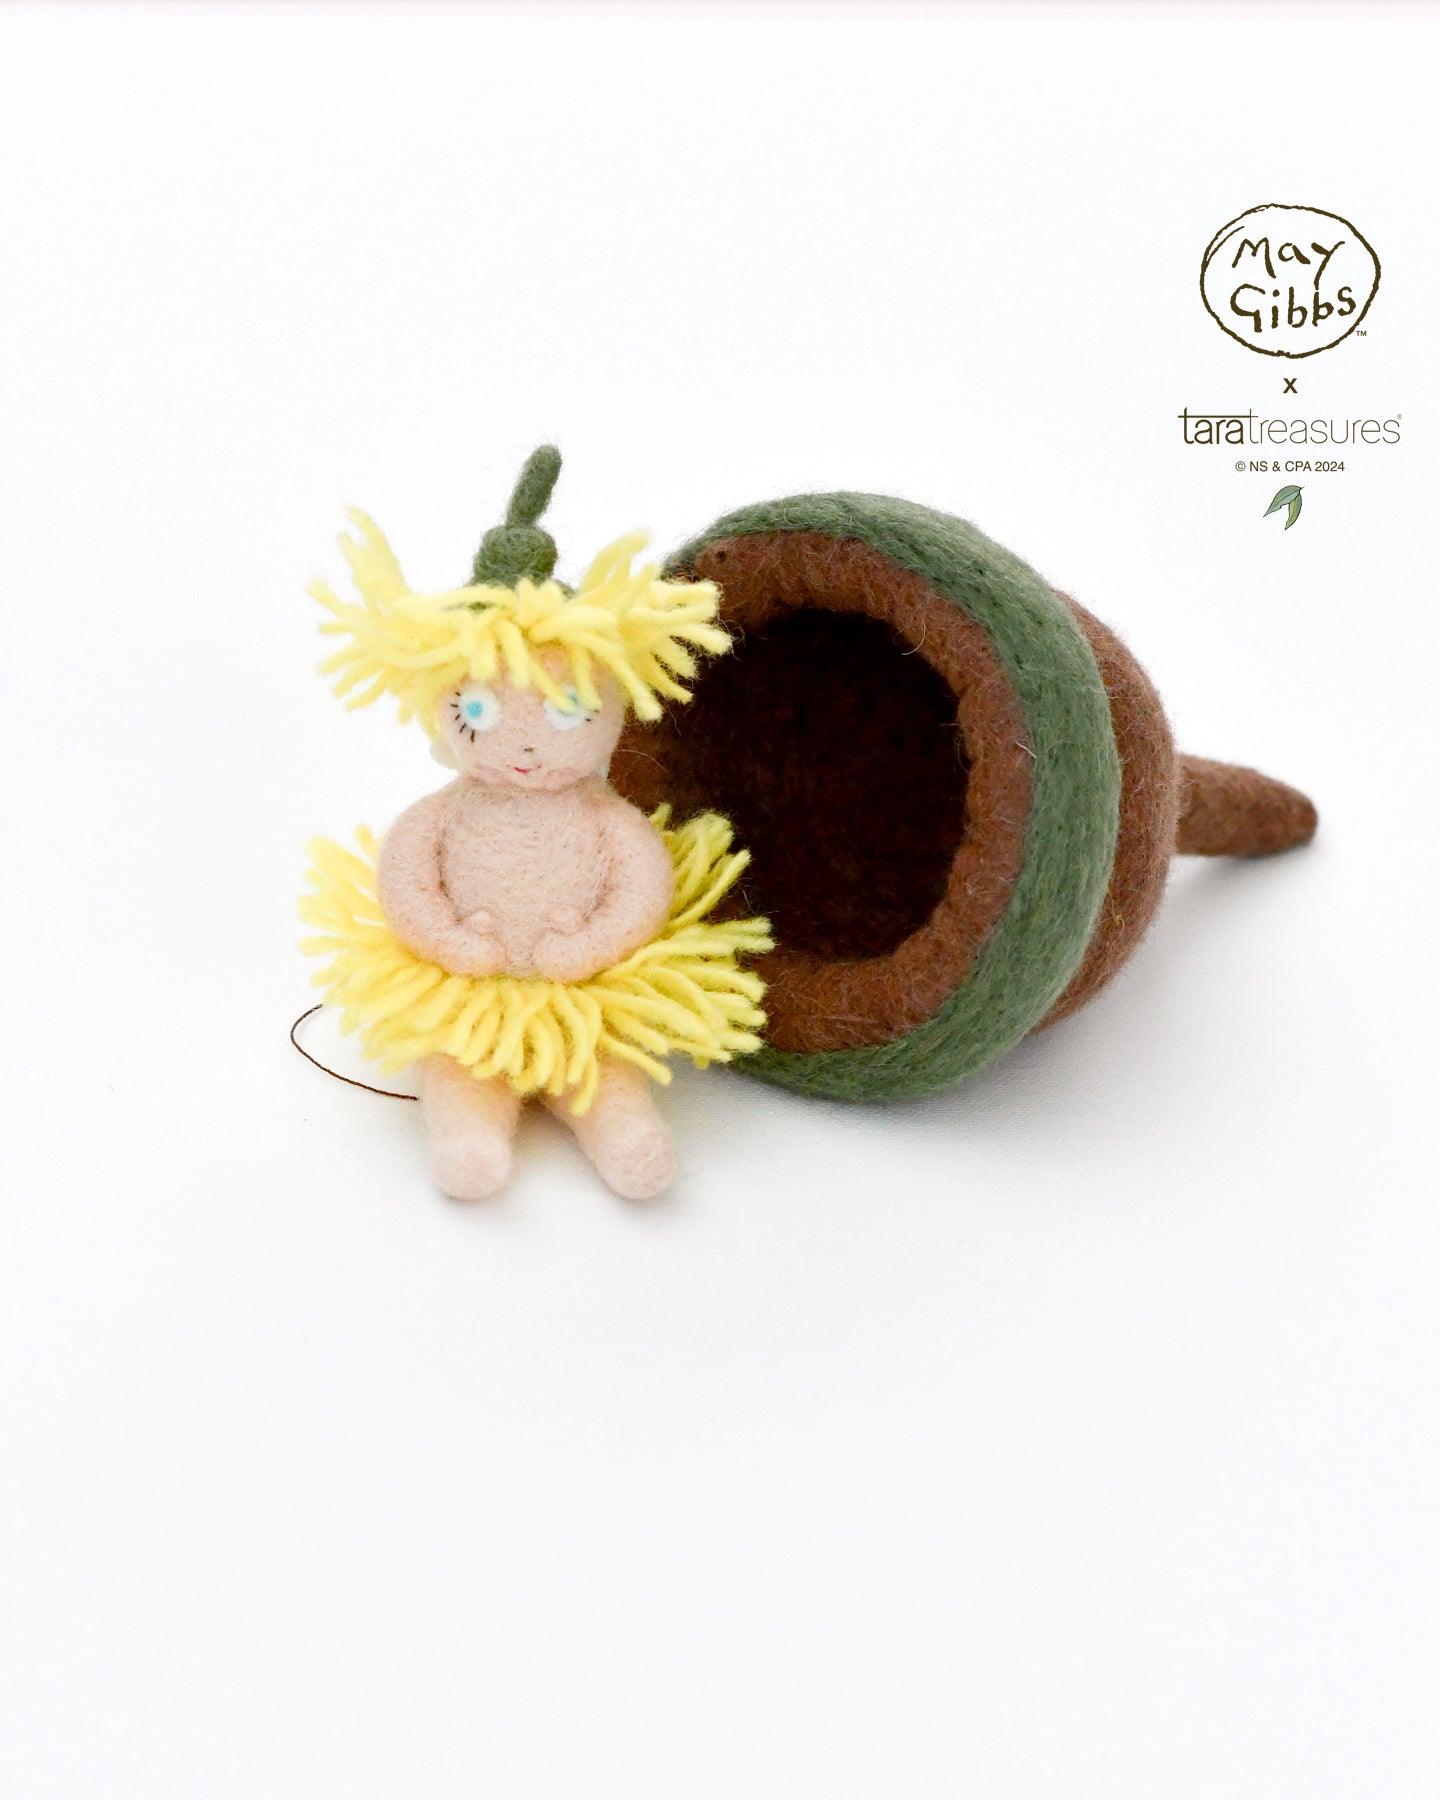 May Gibbs x Tara Treasures - Little Ragged Blossoms Doll with Gum Pod - Tara Treasures